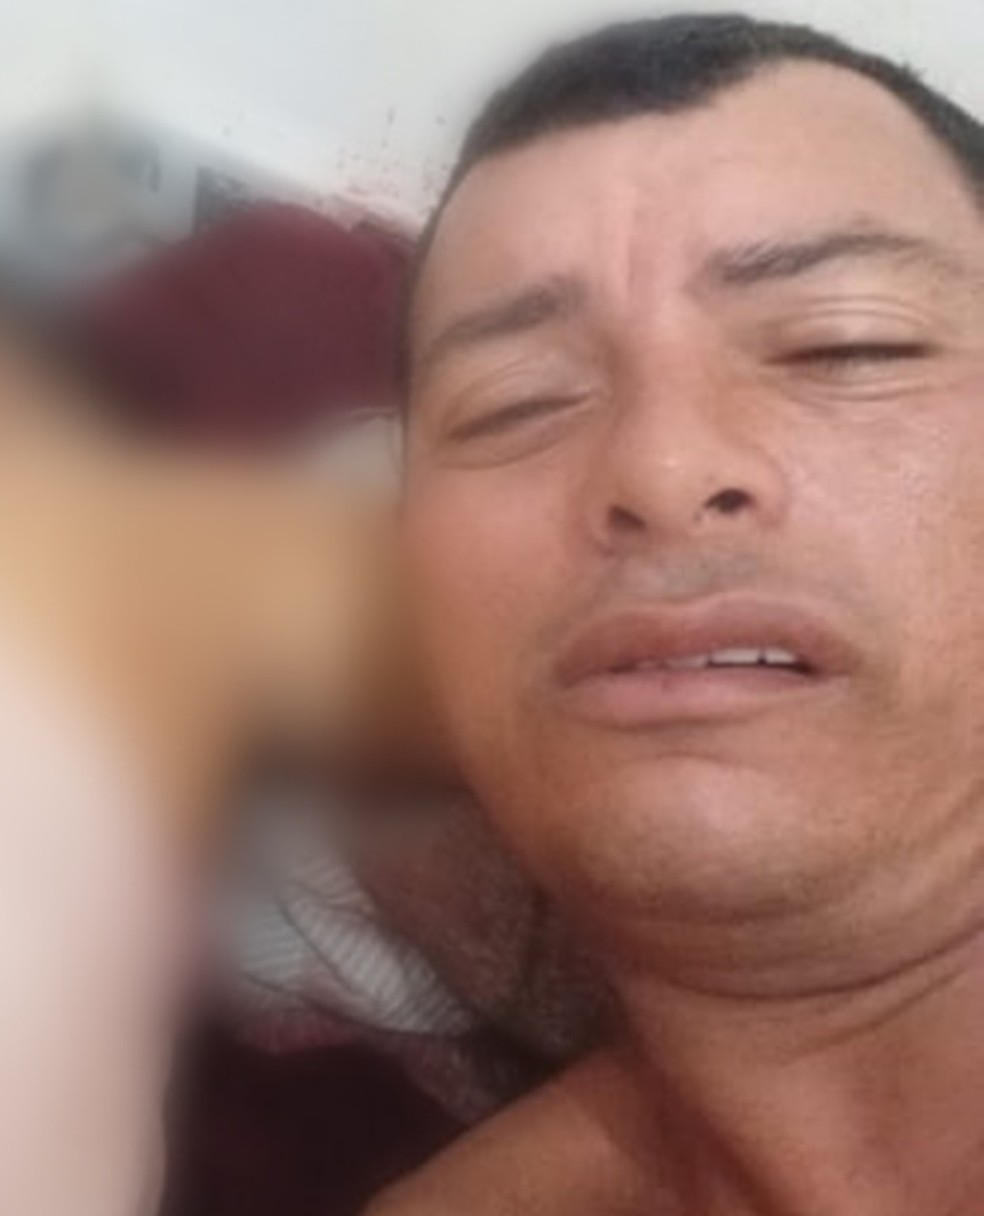 femicidio-selfie-itapororoca2 Suspeito de matar esposa tirou selfie ao lado do corpo após feminicídio na Paraíba